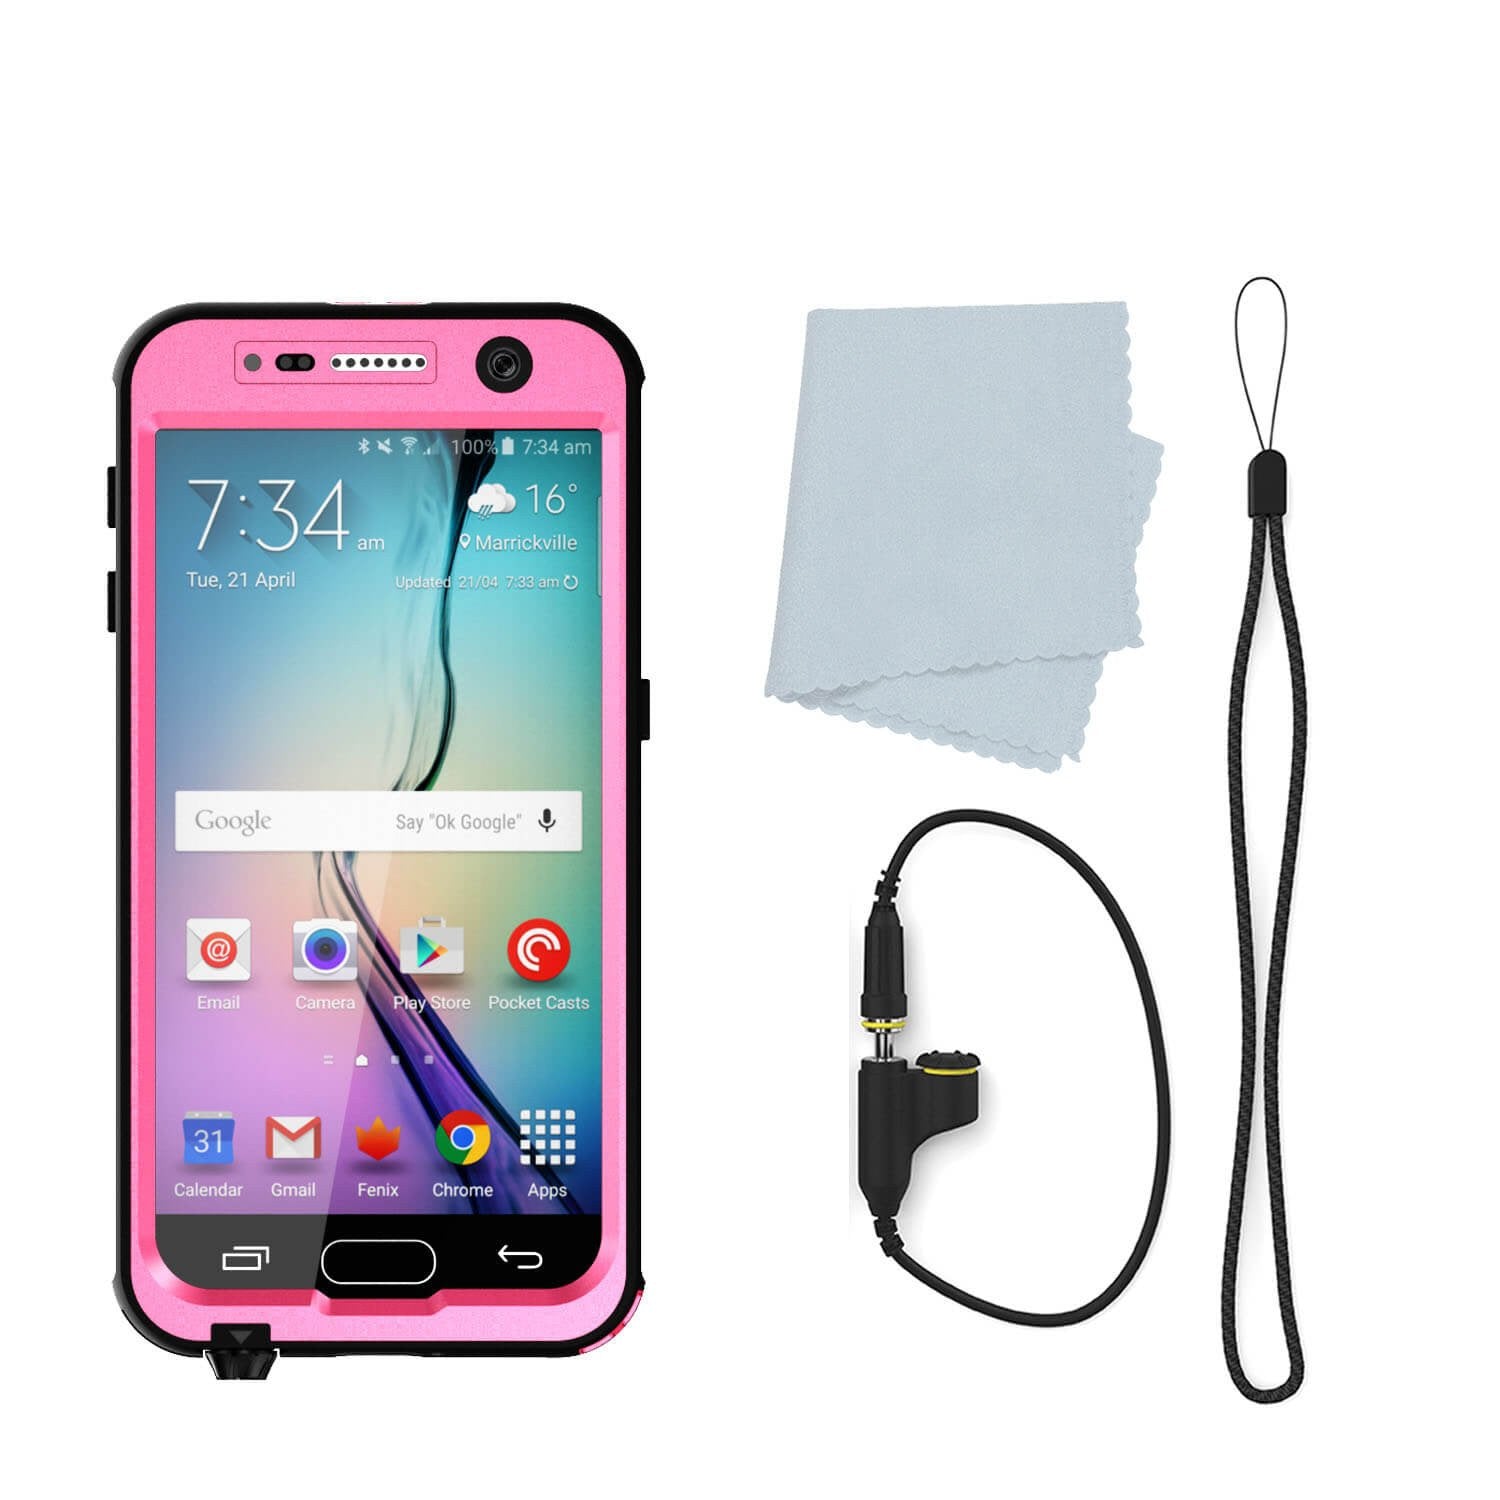 Galaxy S6 Waterproof Case PunkCase StudStar Pink Thin 6.6ft Underwater IP68 Shock/Dirt/Snow Proof - PunkCase NZ